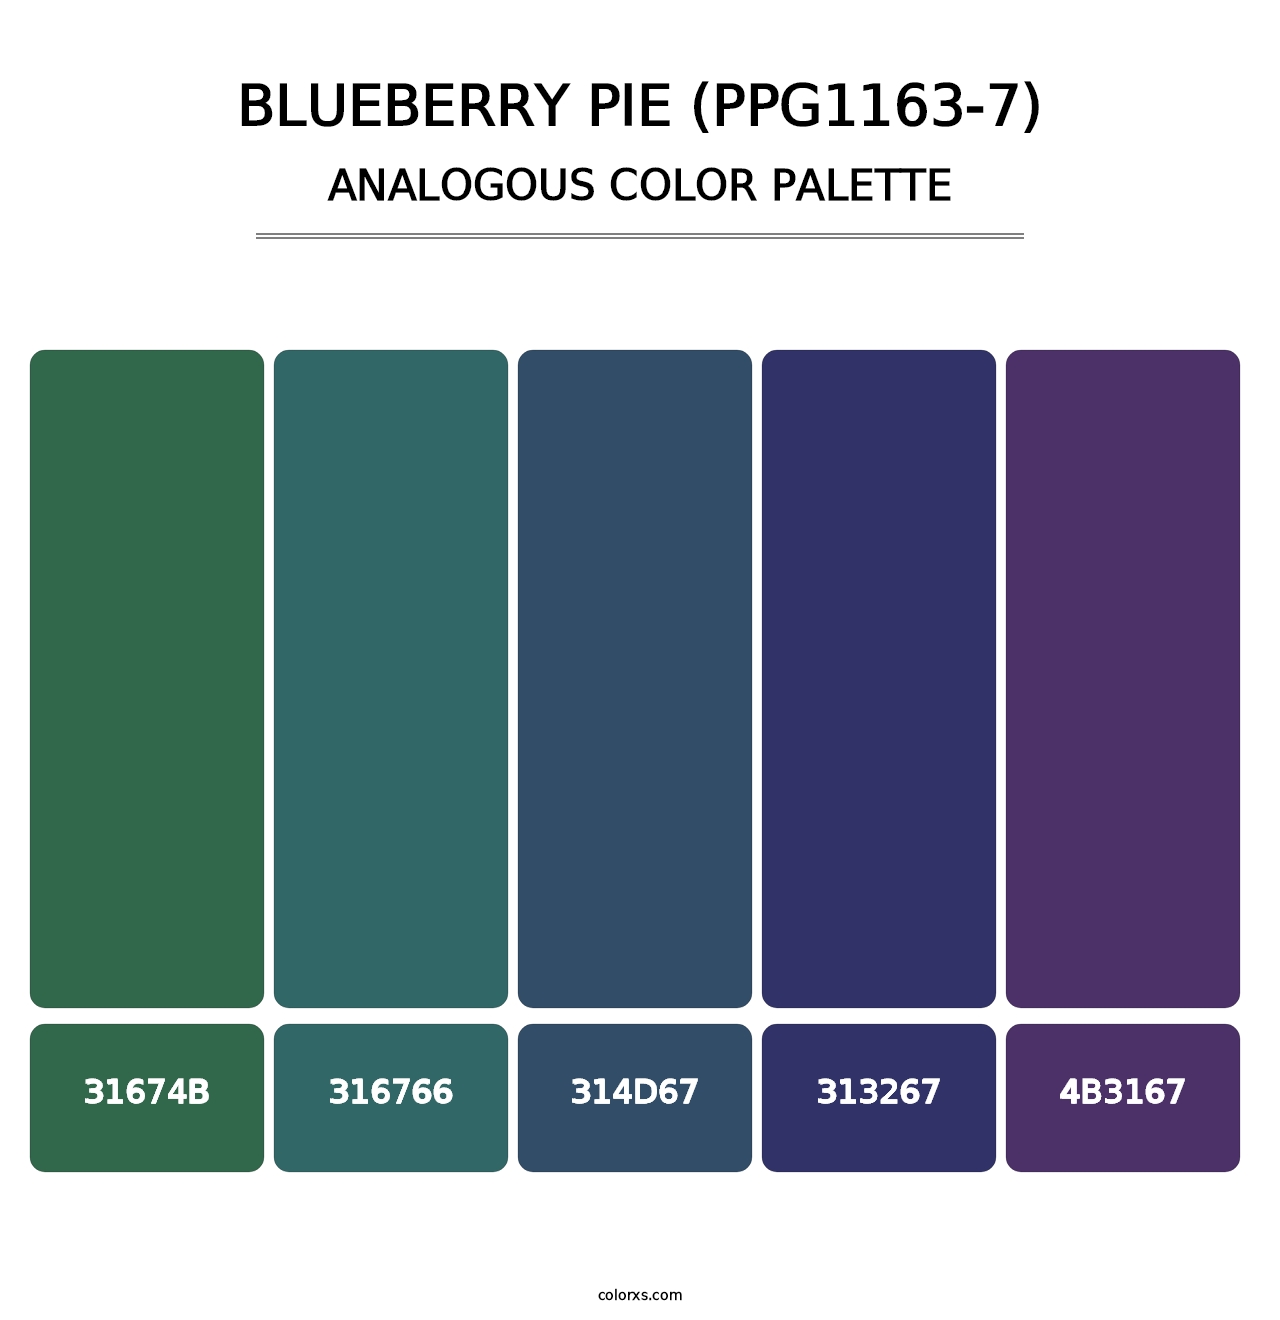 Blueberry Pie (PPG1163-7) - Analogous Color Palette